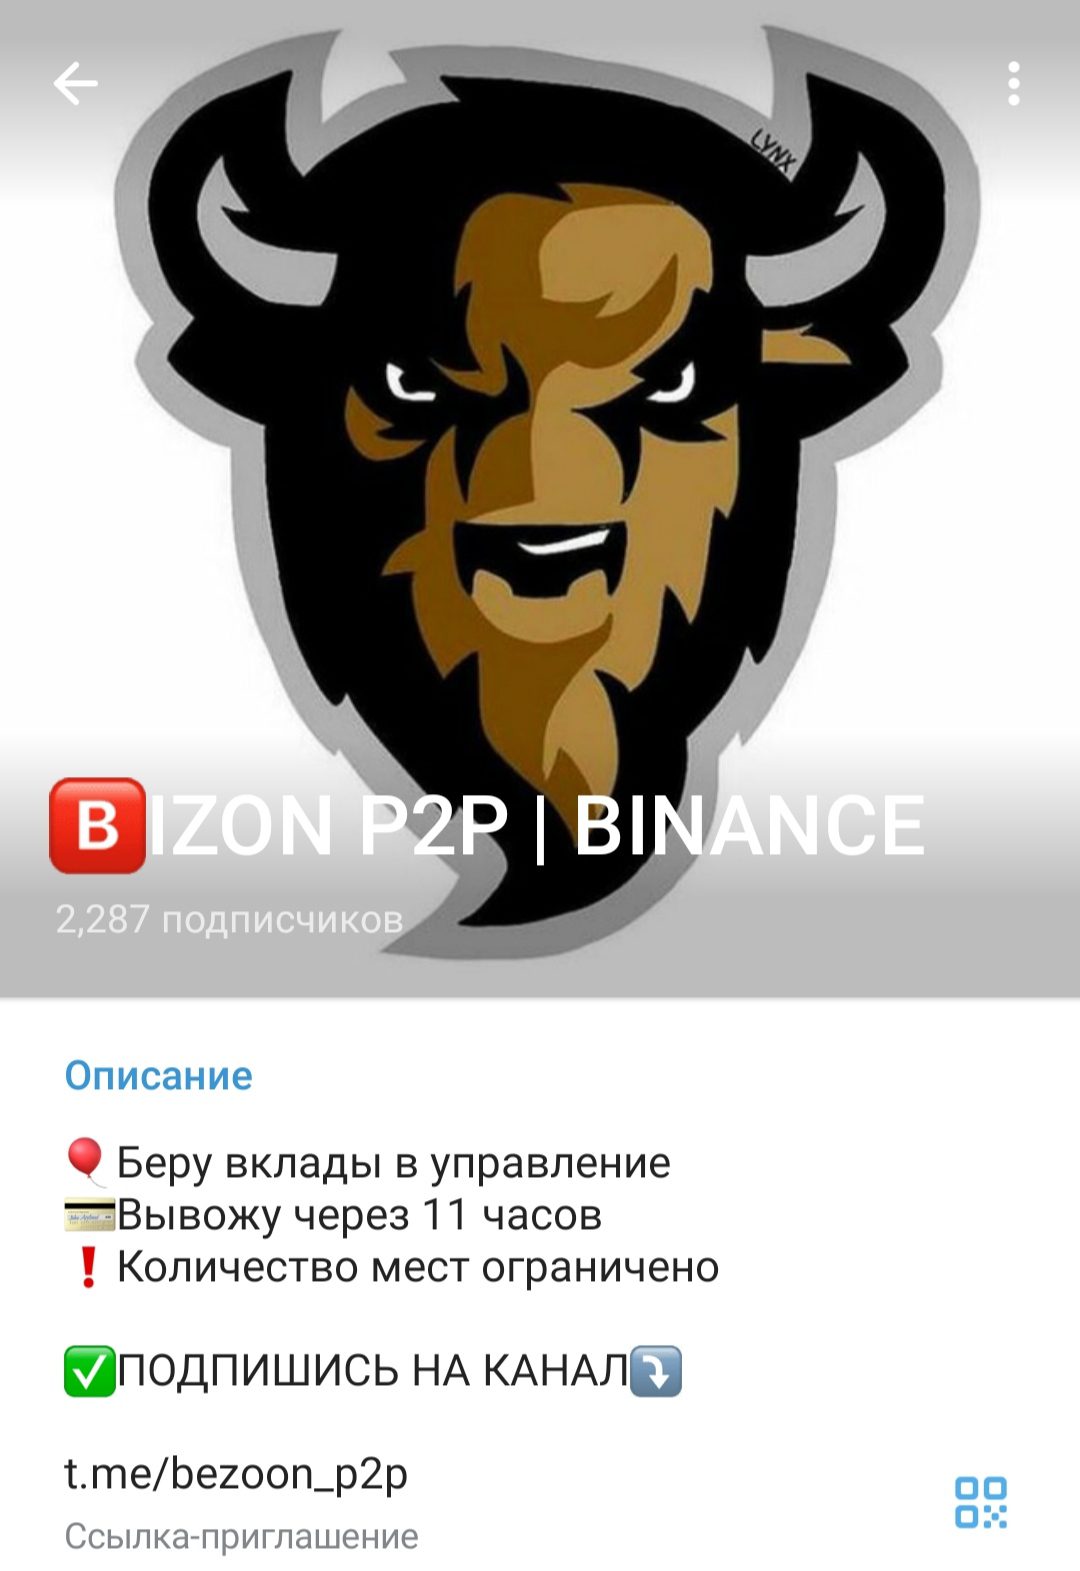 Bizon P2P Binance телеграмм